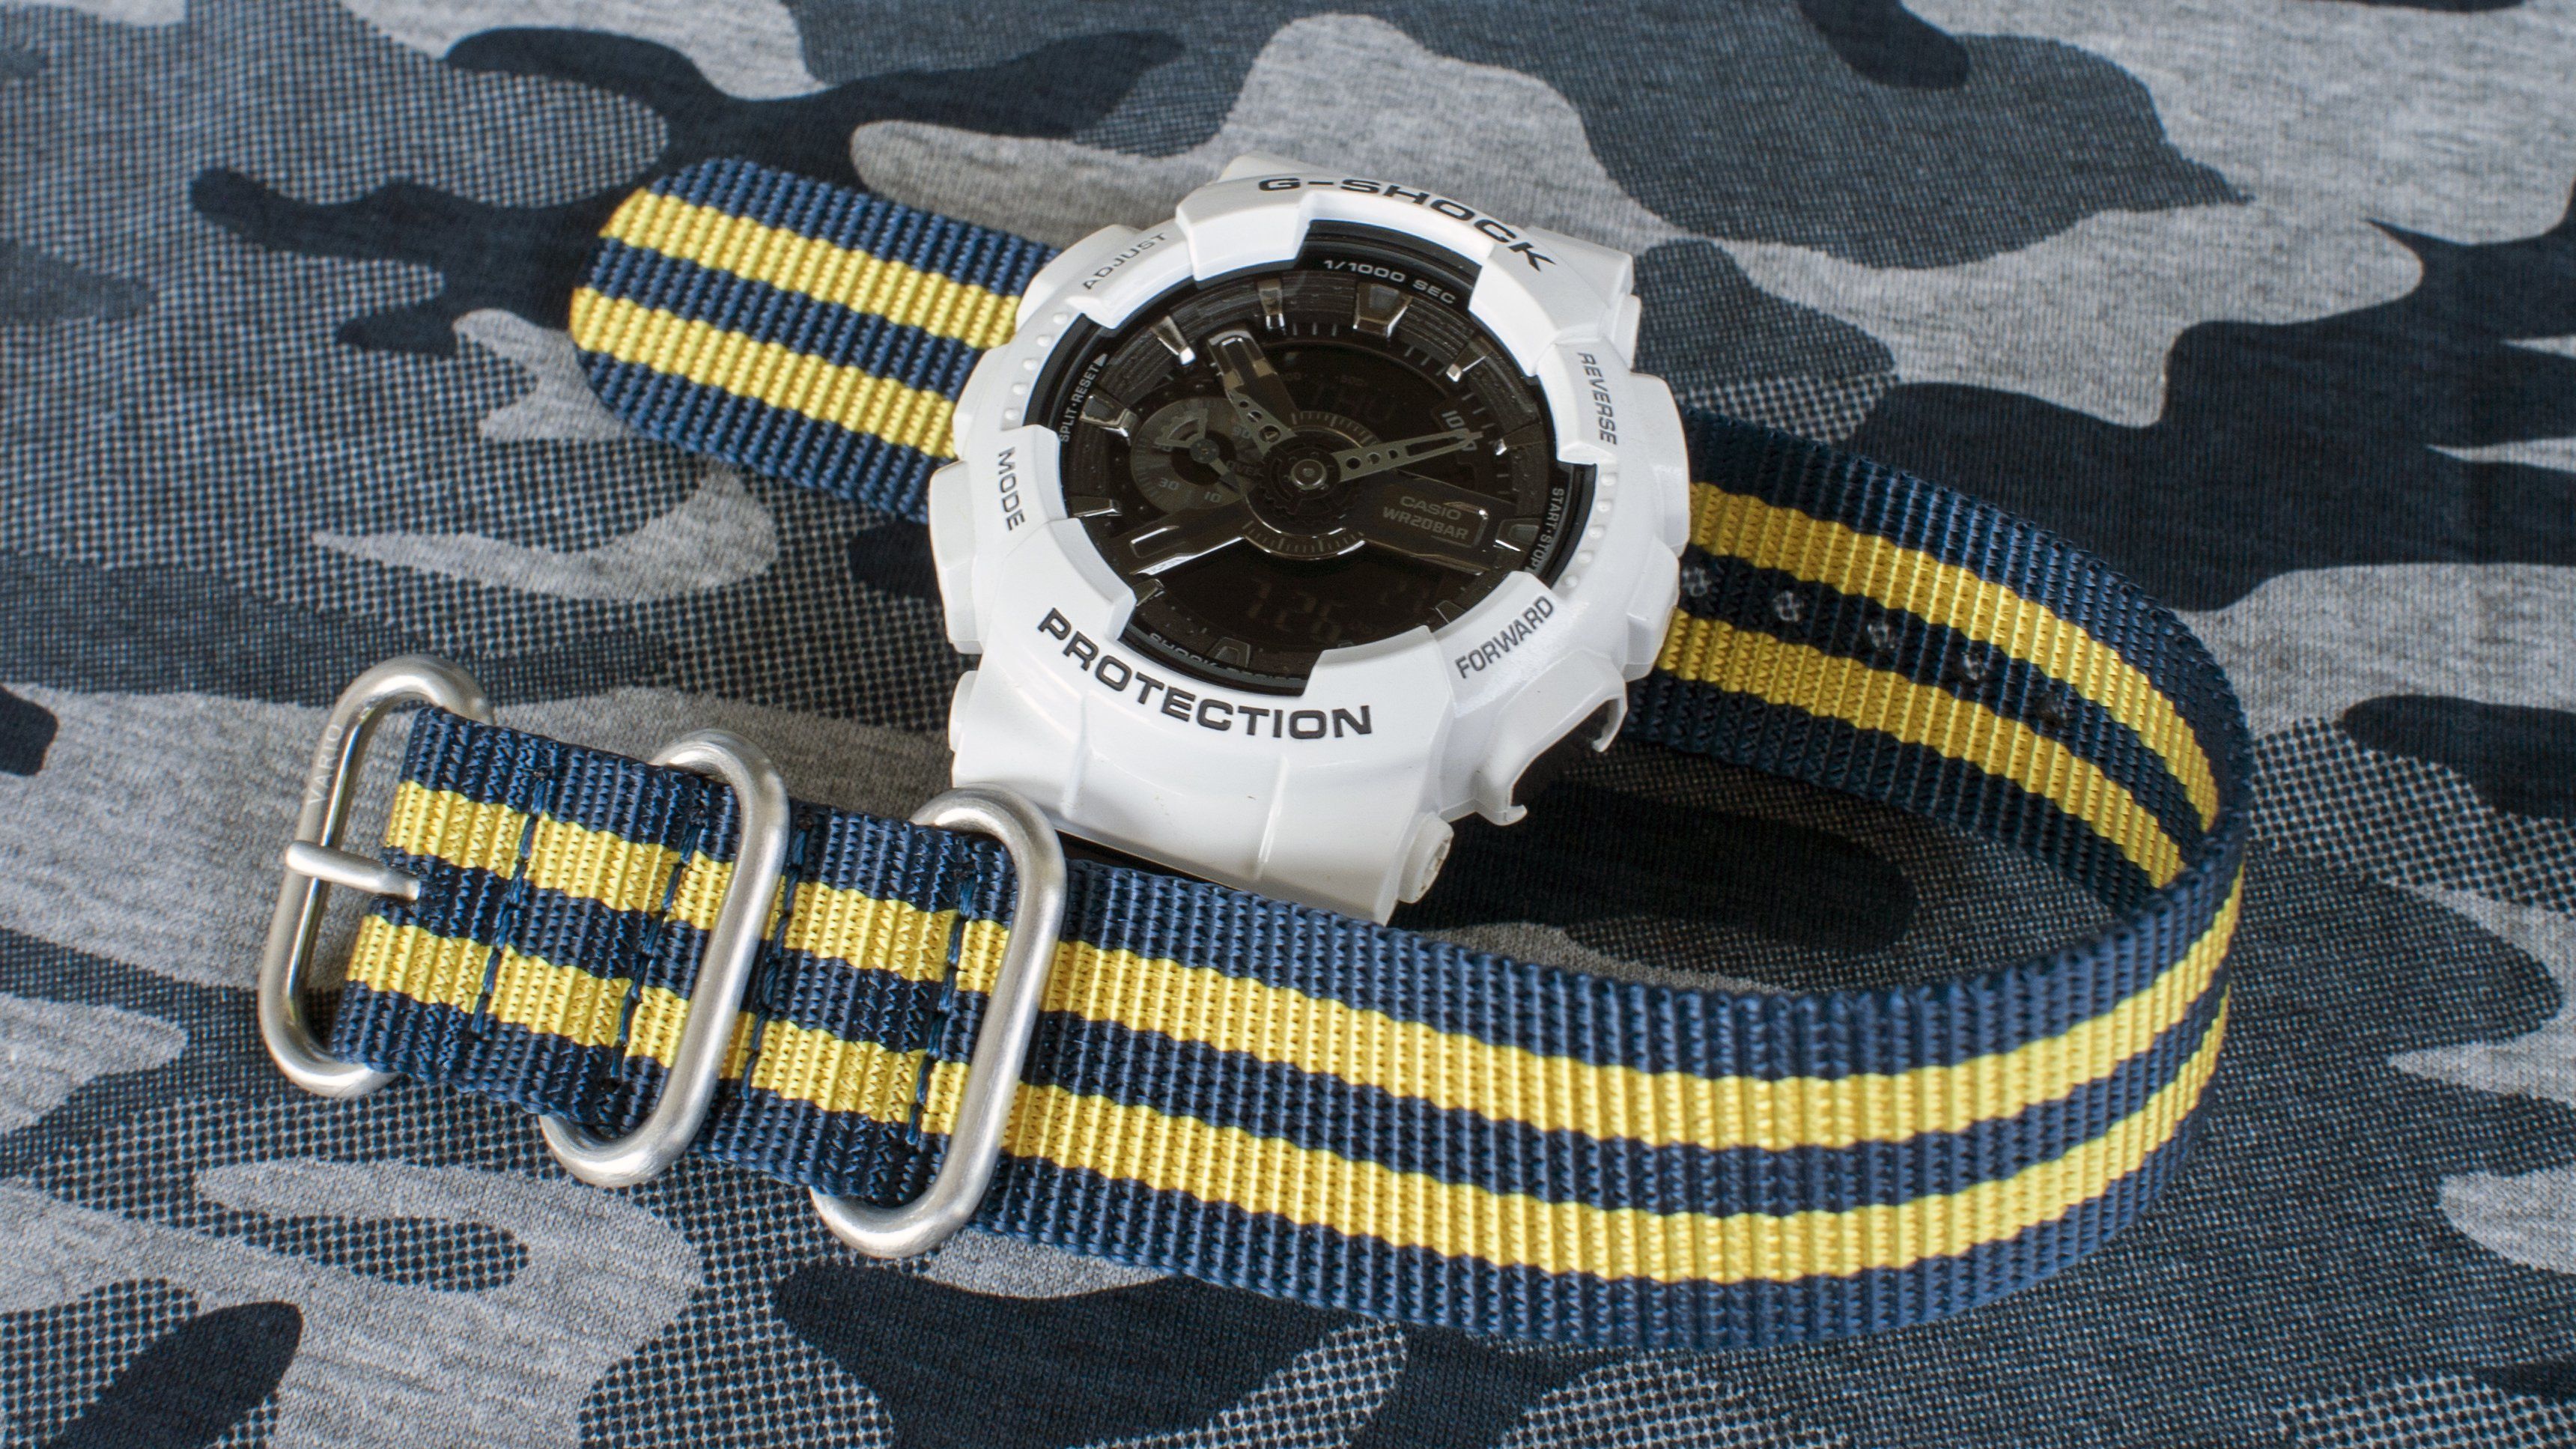 ga110 with vario ballistic nylon blue yellow stripe watch strap